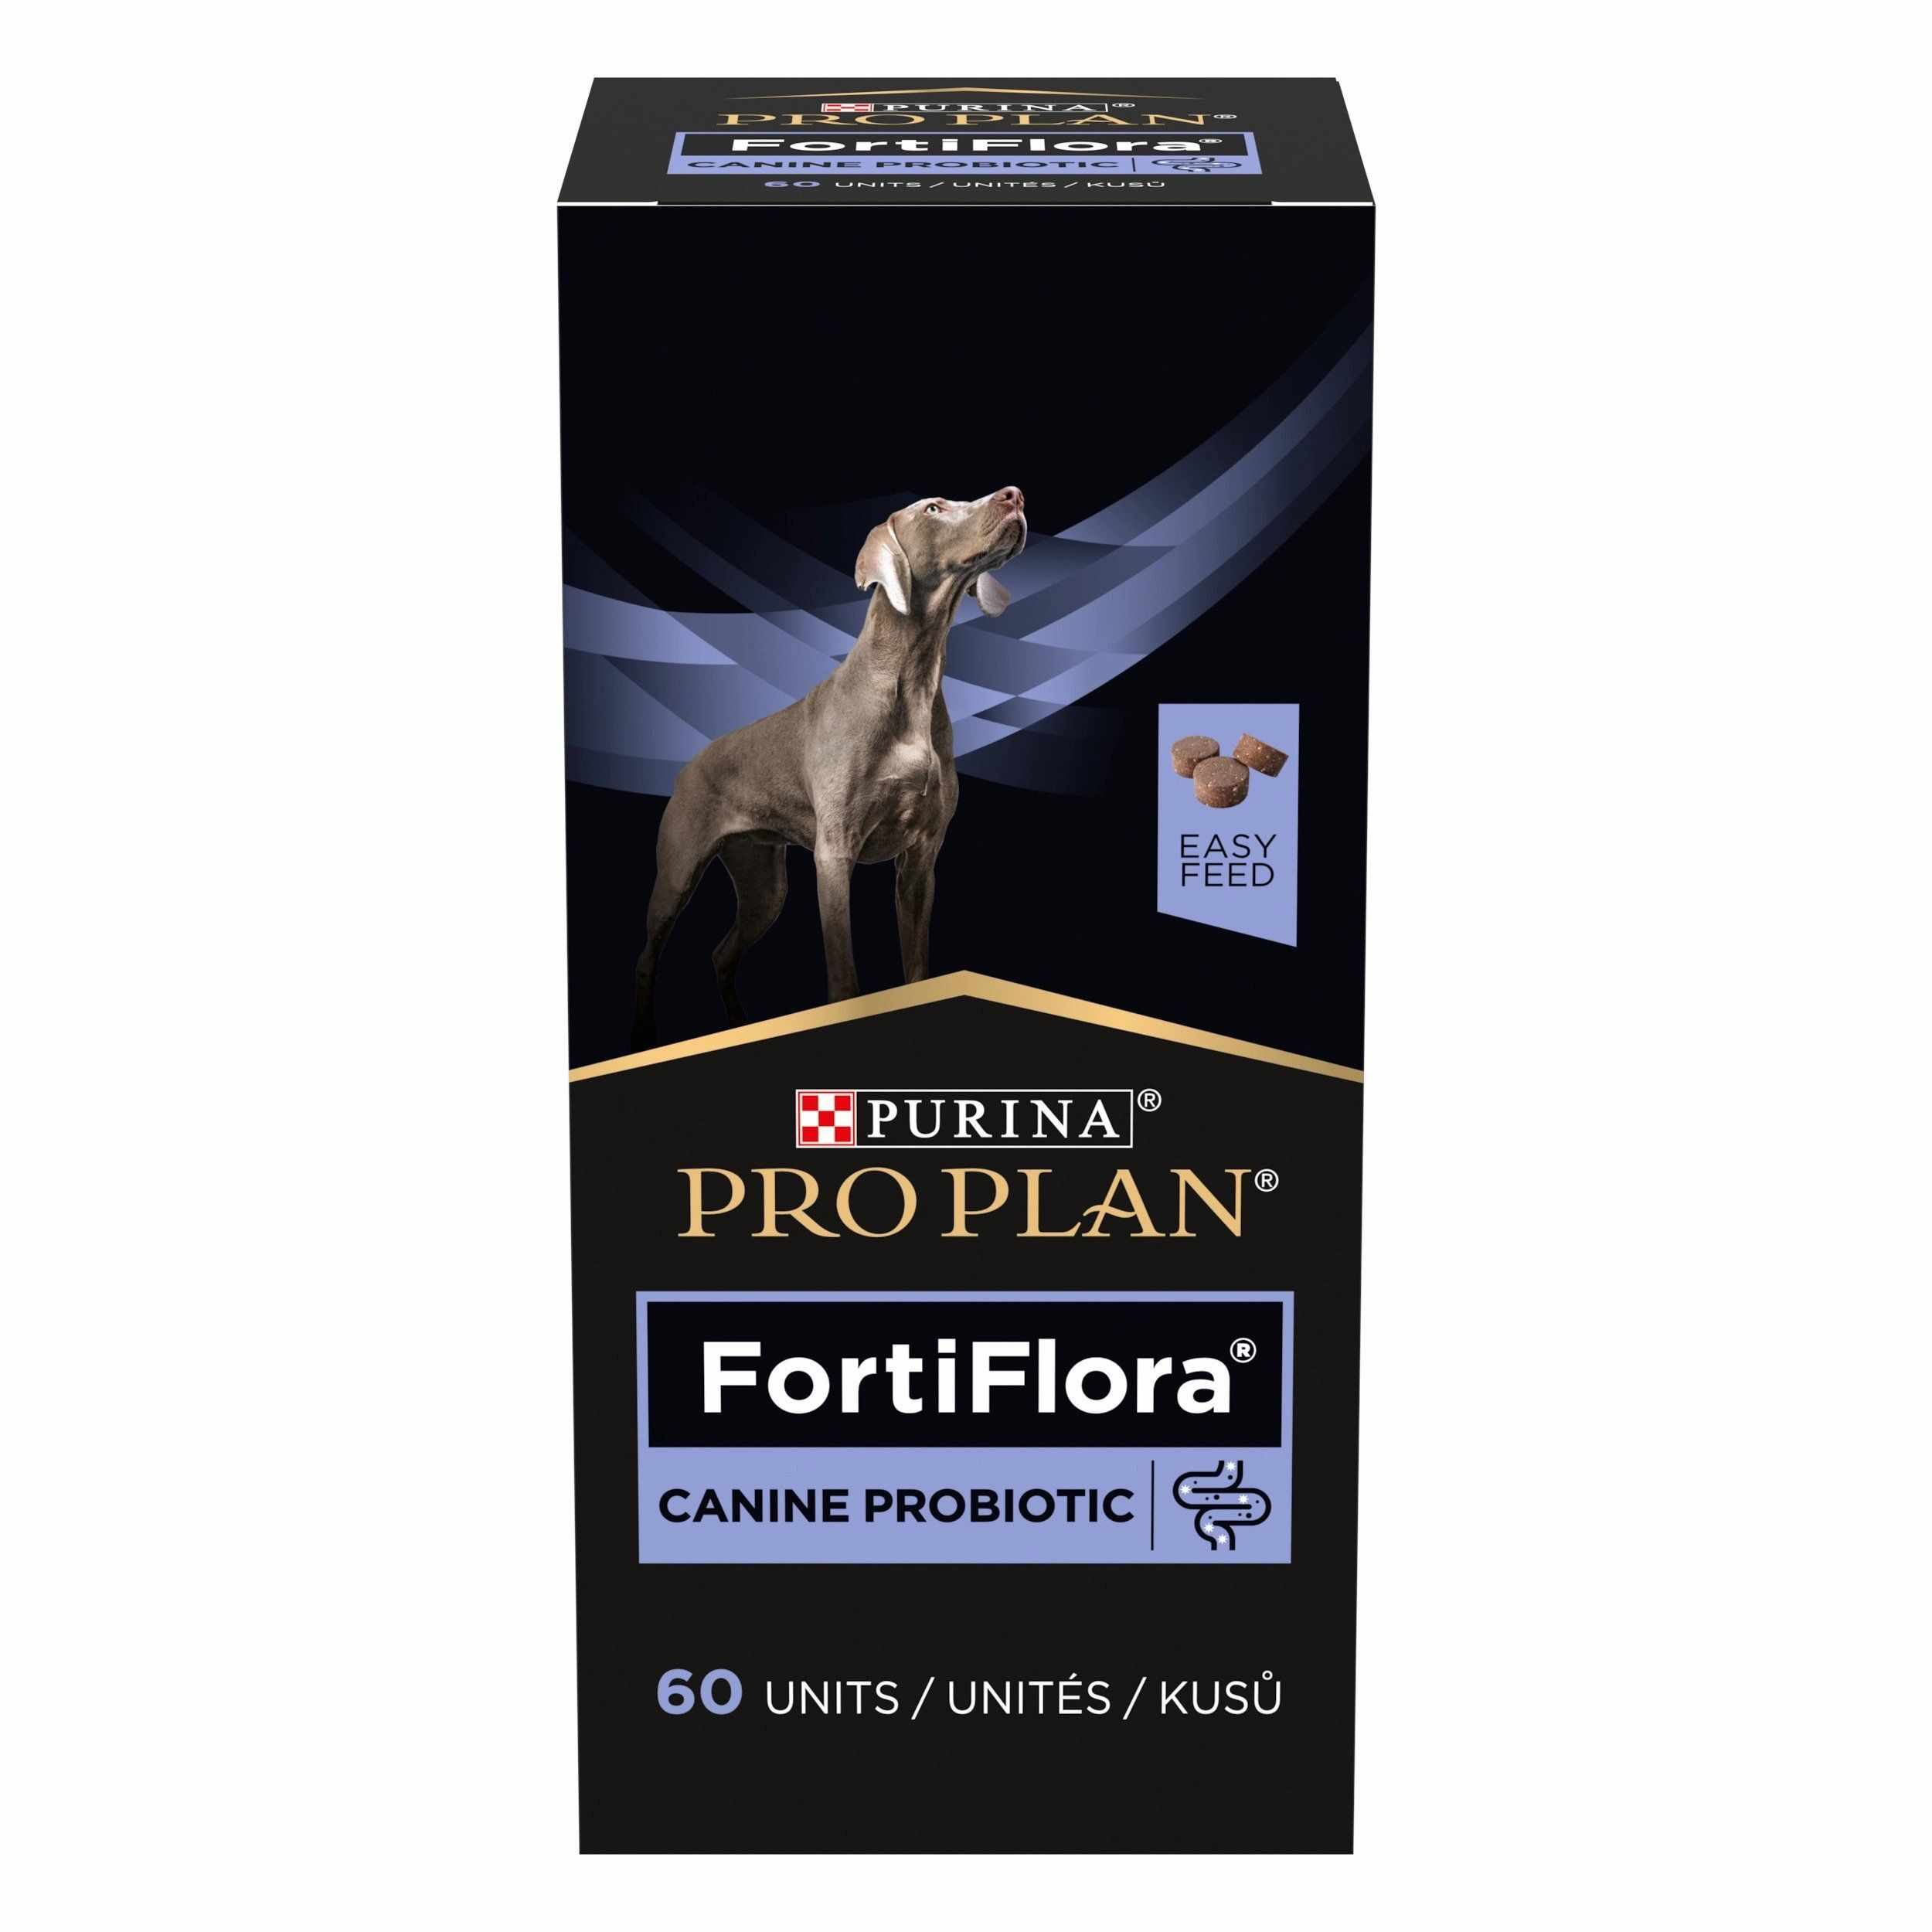 Purina Pro Plan FortiFlora Canine Probiotic, 60 tablete masticabile